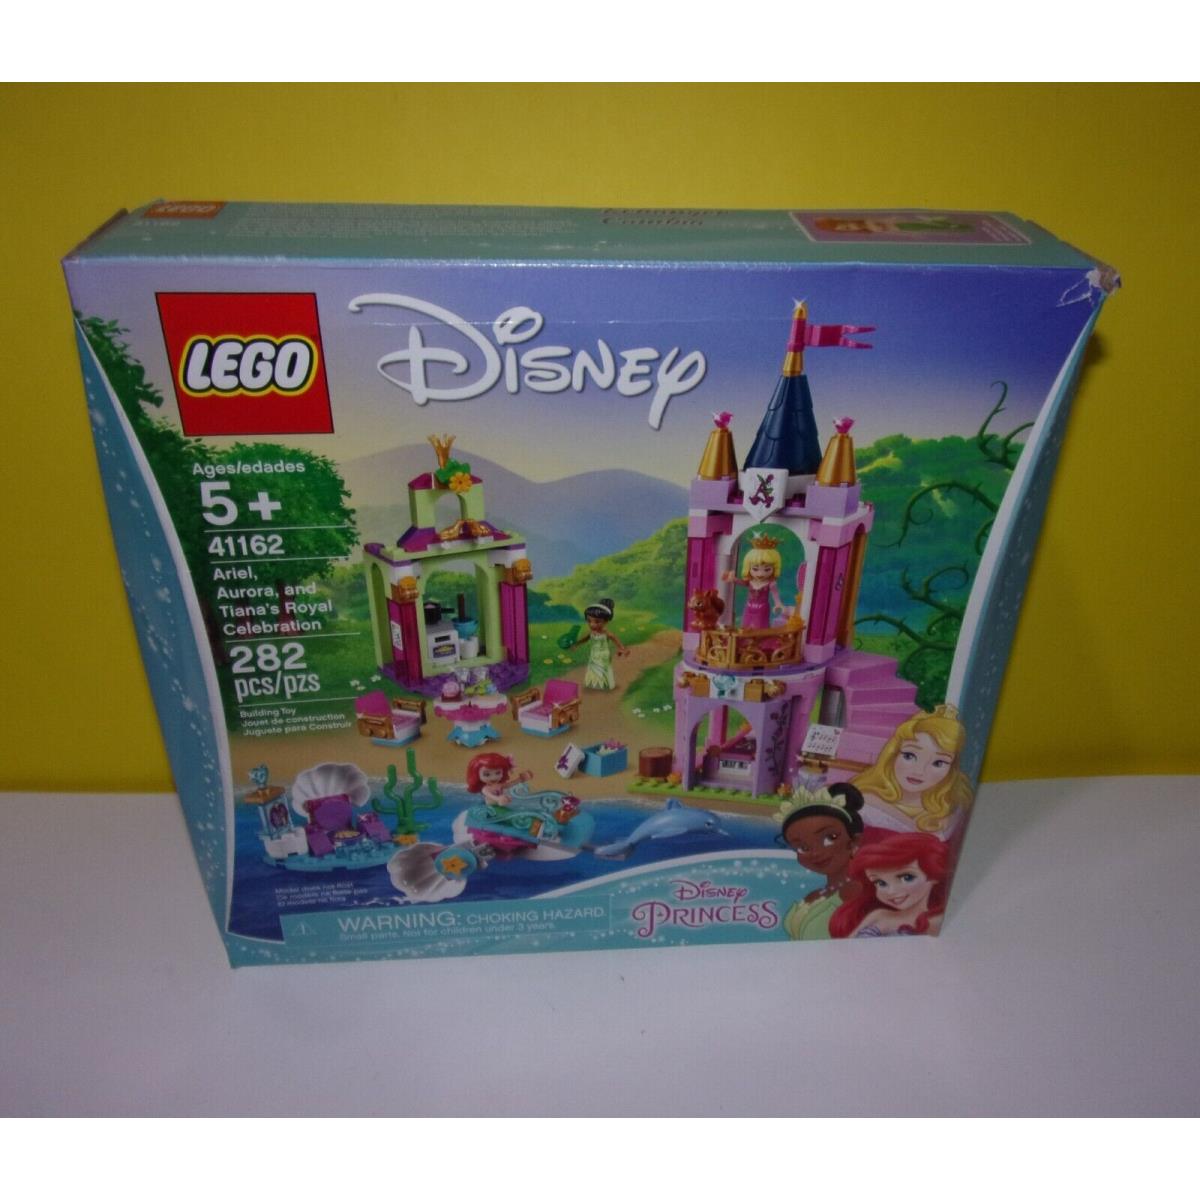 Lego Disney Princess 41162 Ariel Aurora and Tiana`s Royal Celebration